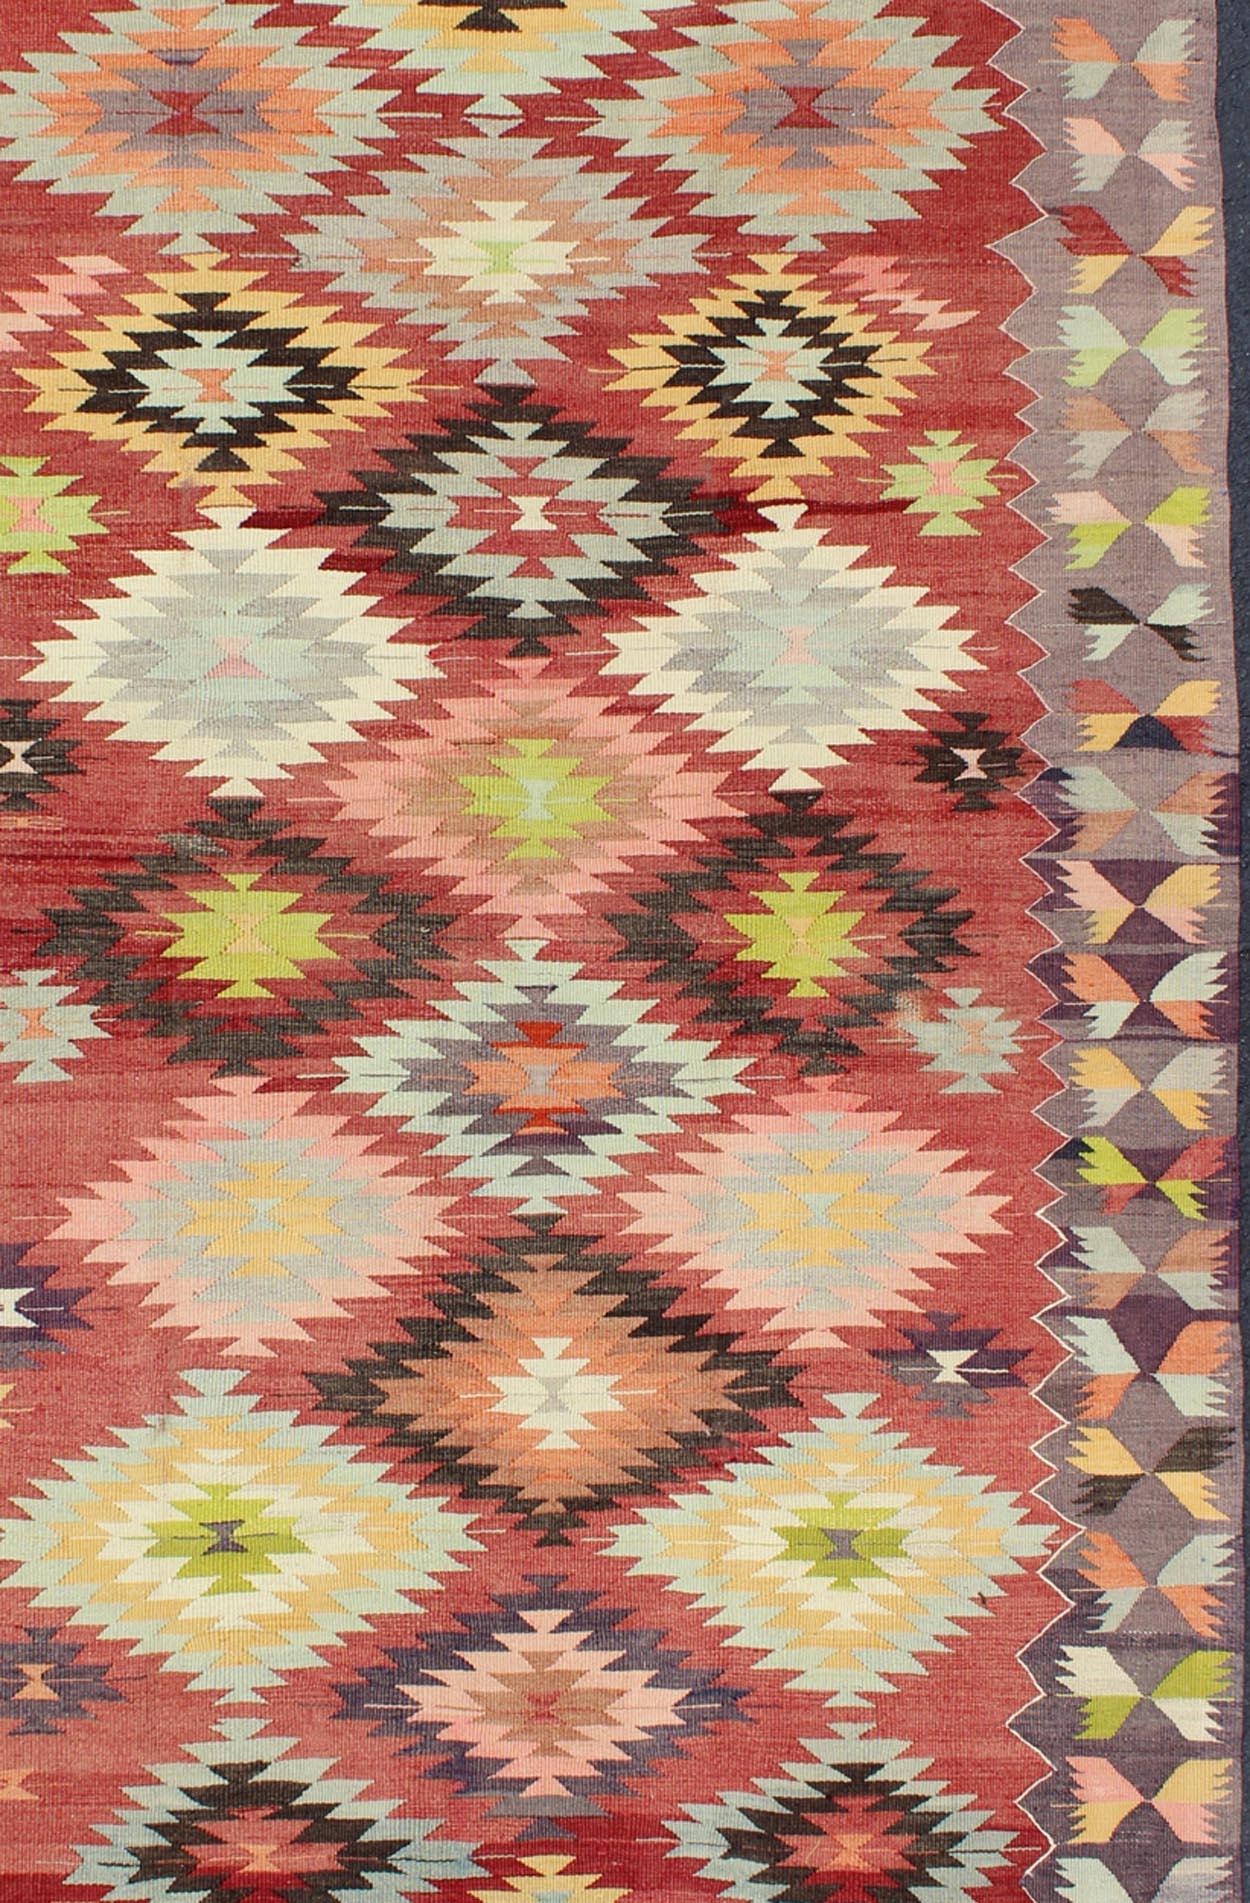 Mid-20th Century Colorful Turkish Kilim Carpet with Geometric Design